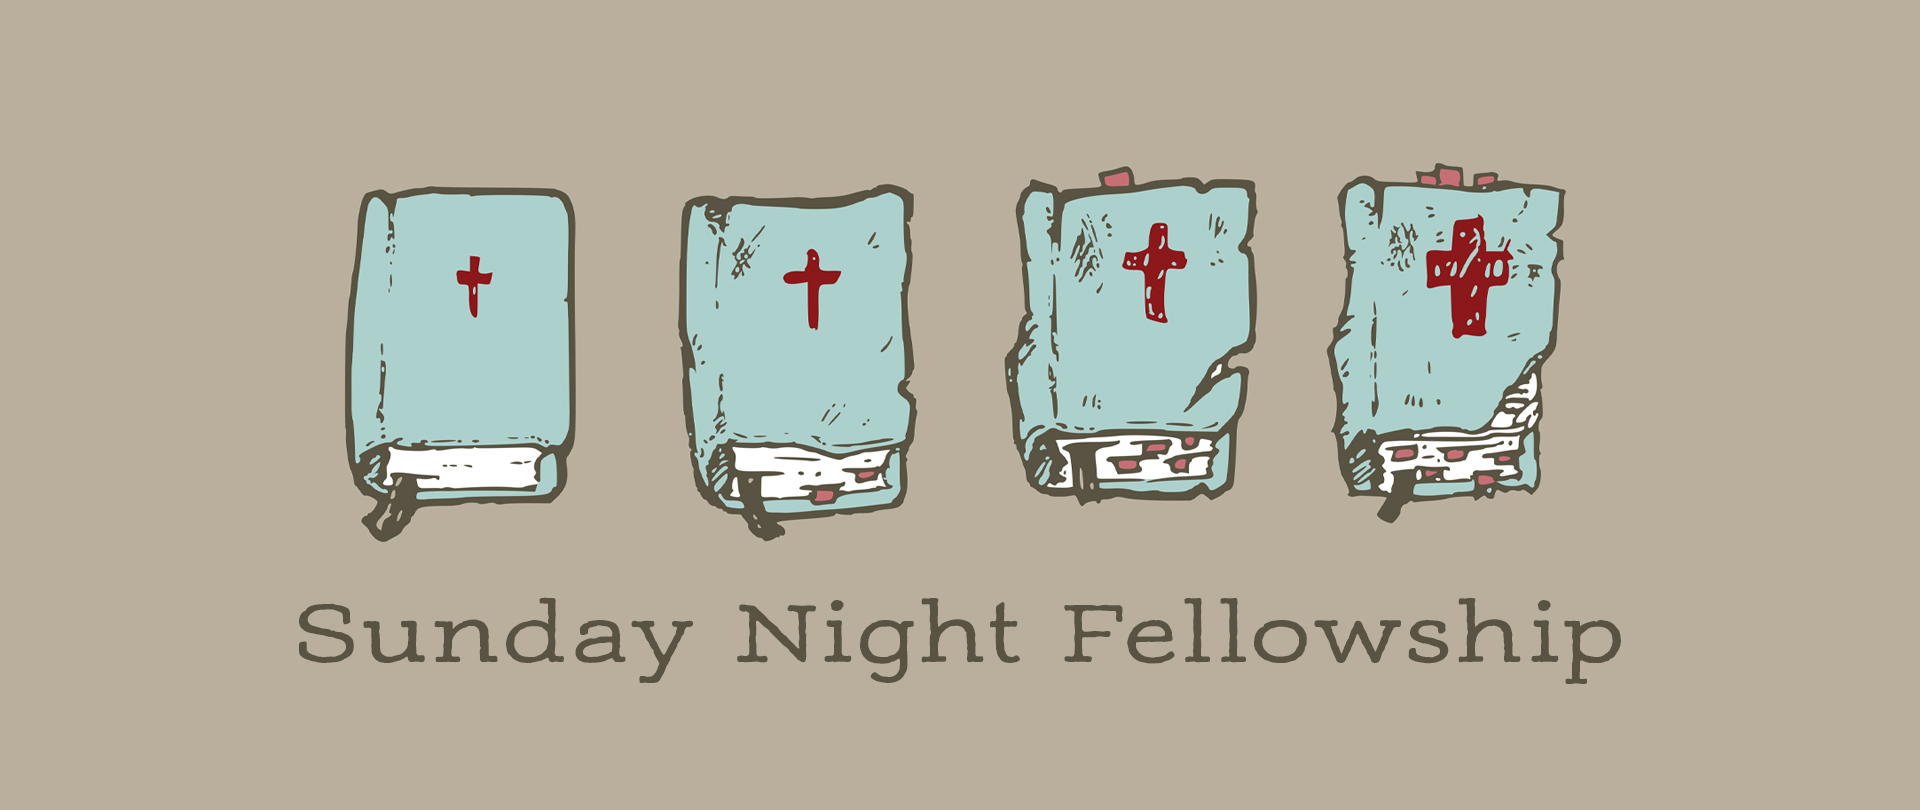 Sunday Night Fellowship
2:42 Outreach & Dinner
September 8
